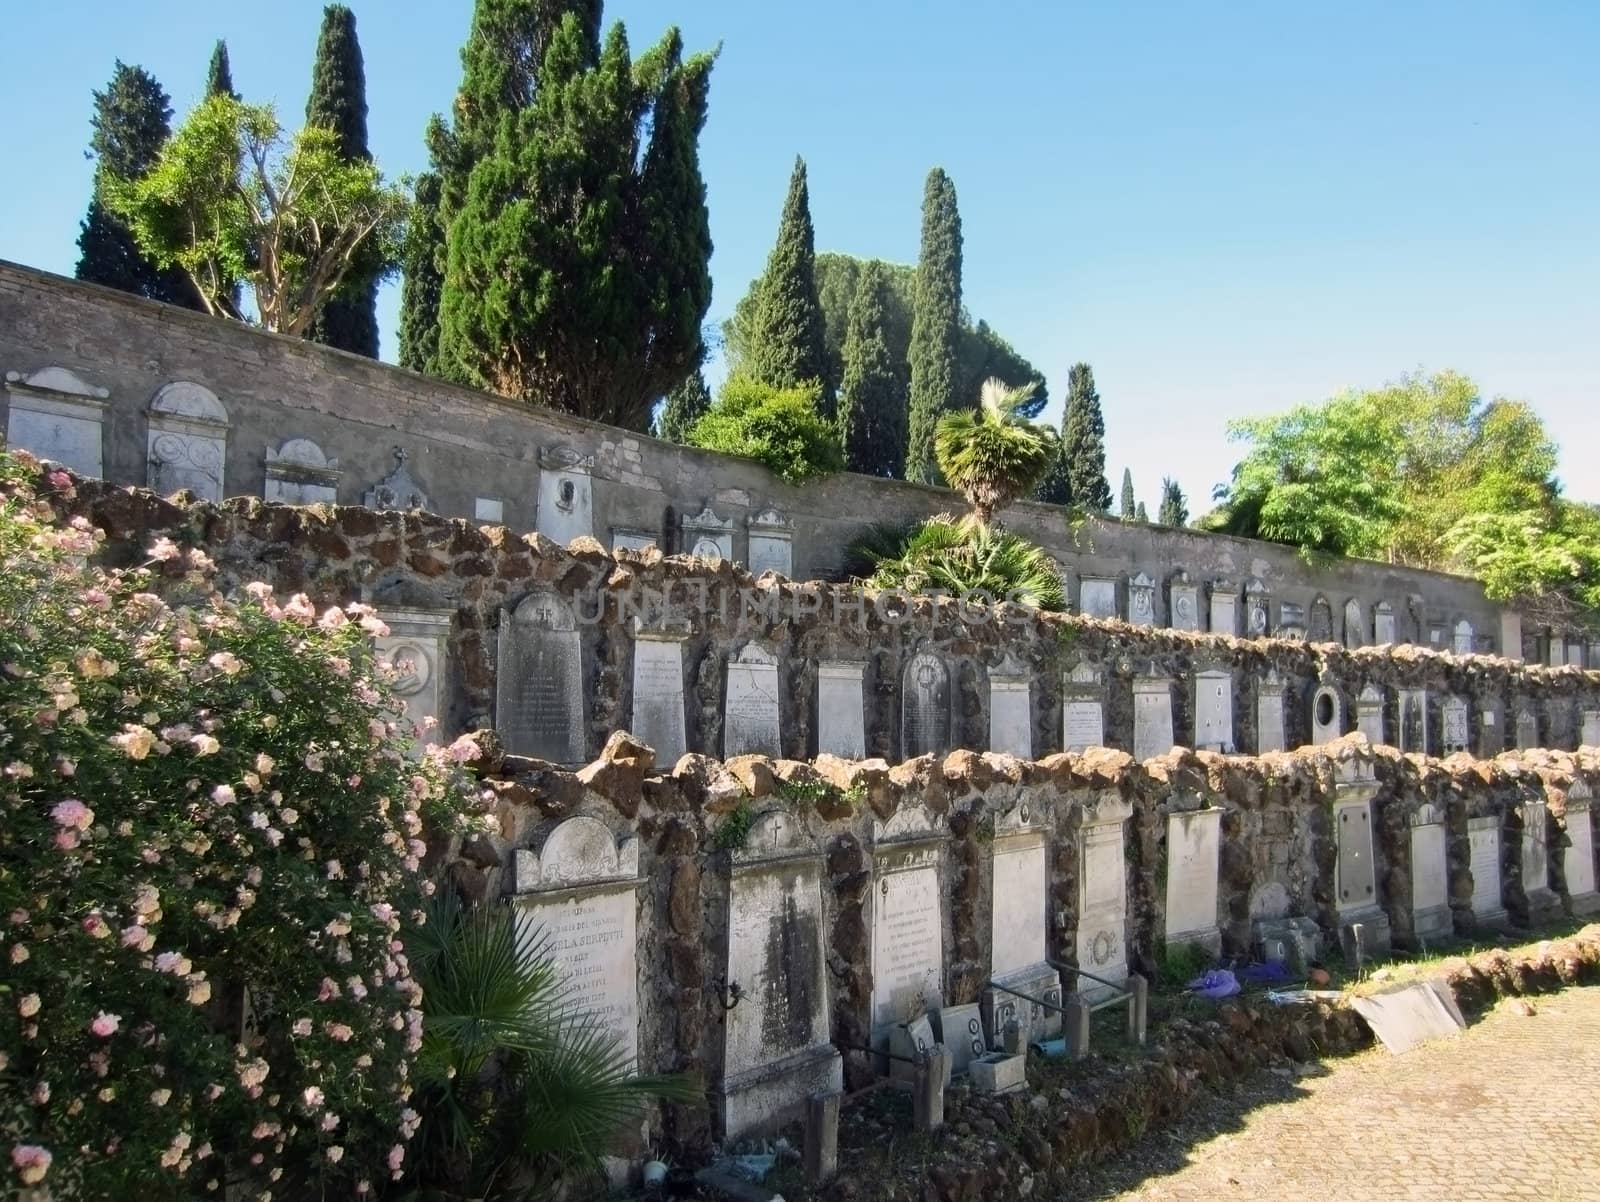 Cemetery, Rome by jol66